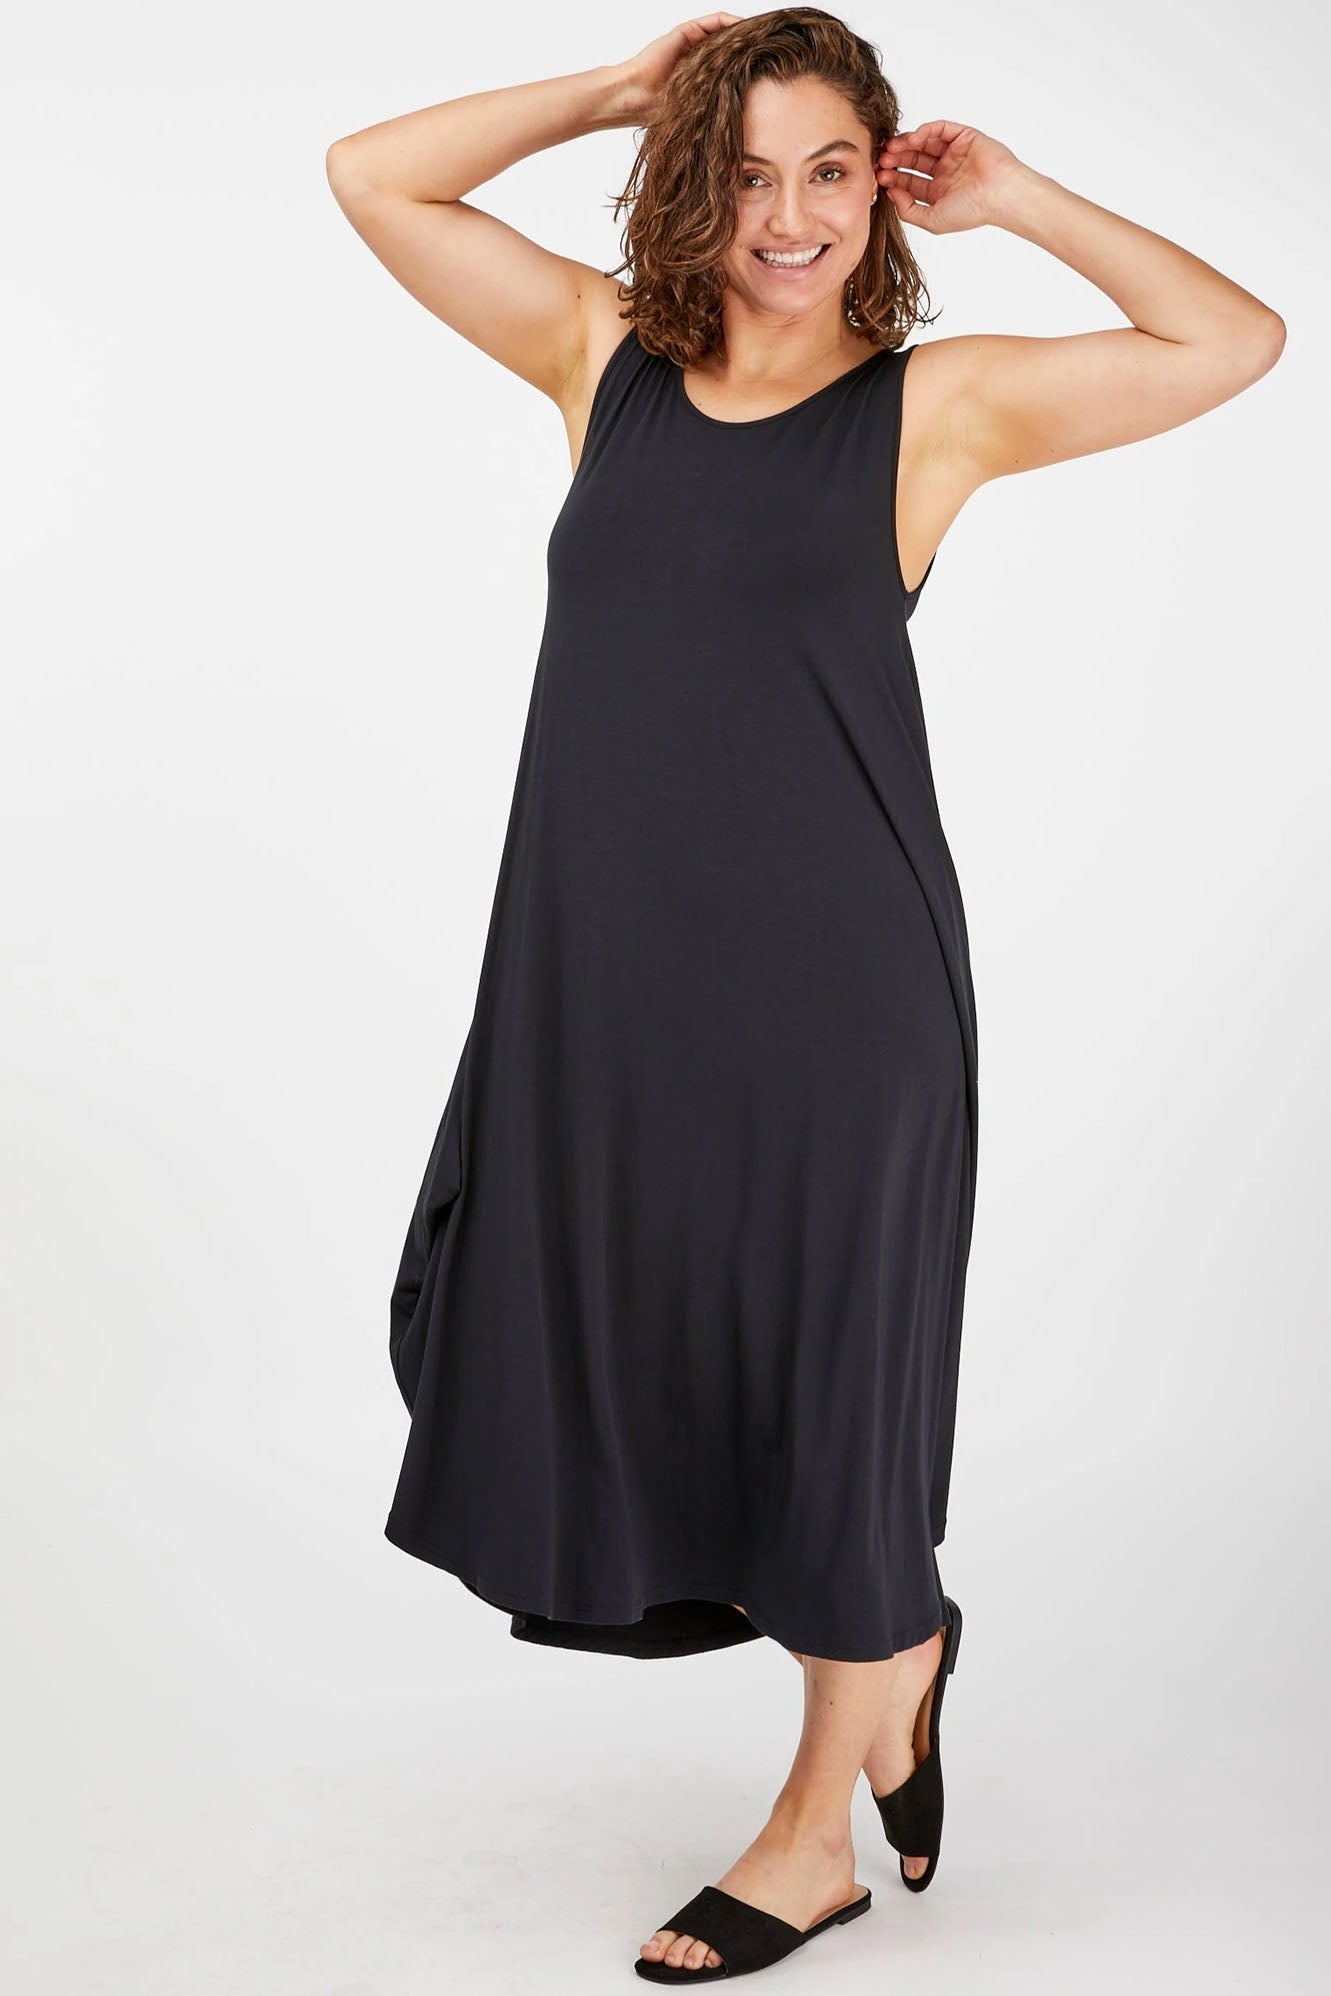 Woman wearing black Tani Sleeveless Tri Dress 79432